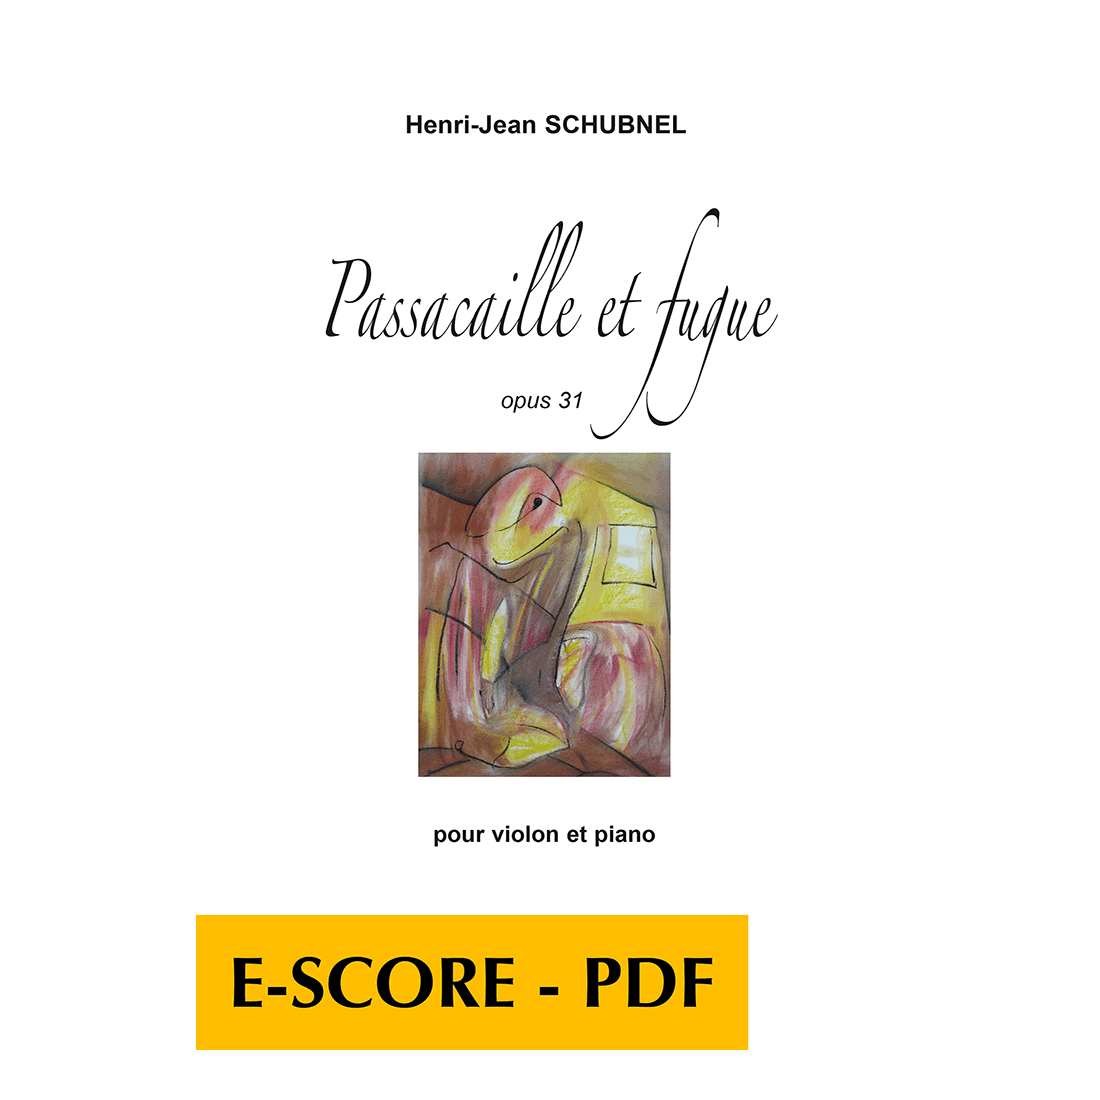 Passacaille et fugue for violin and piano - E-score PDF